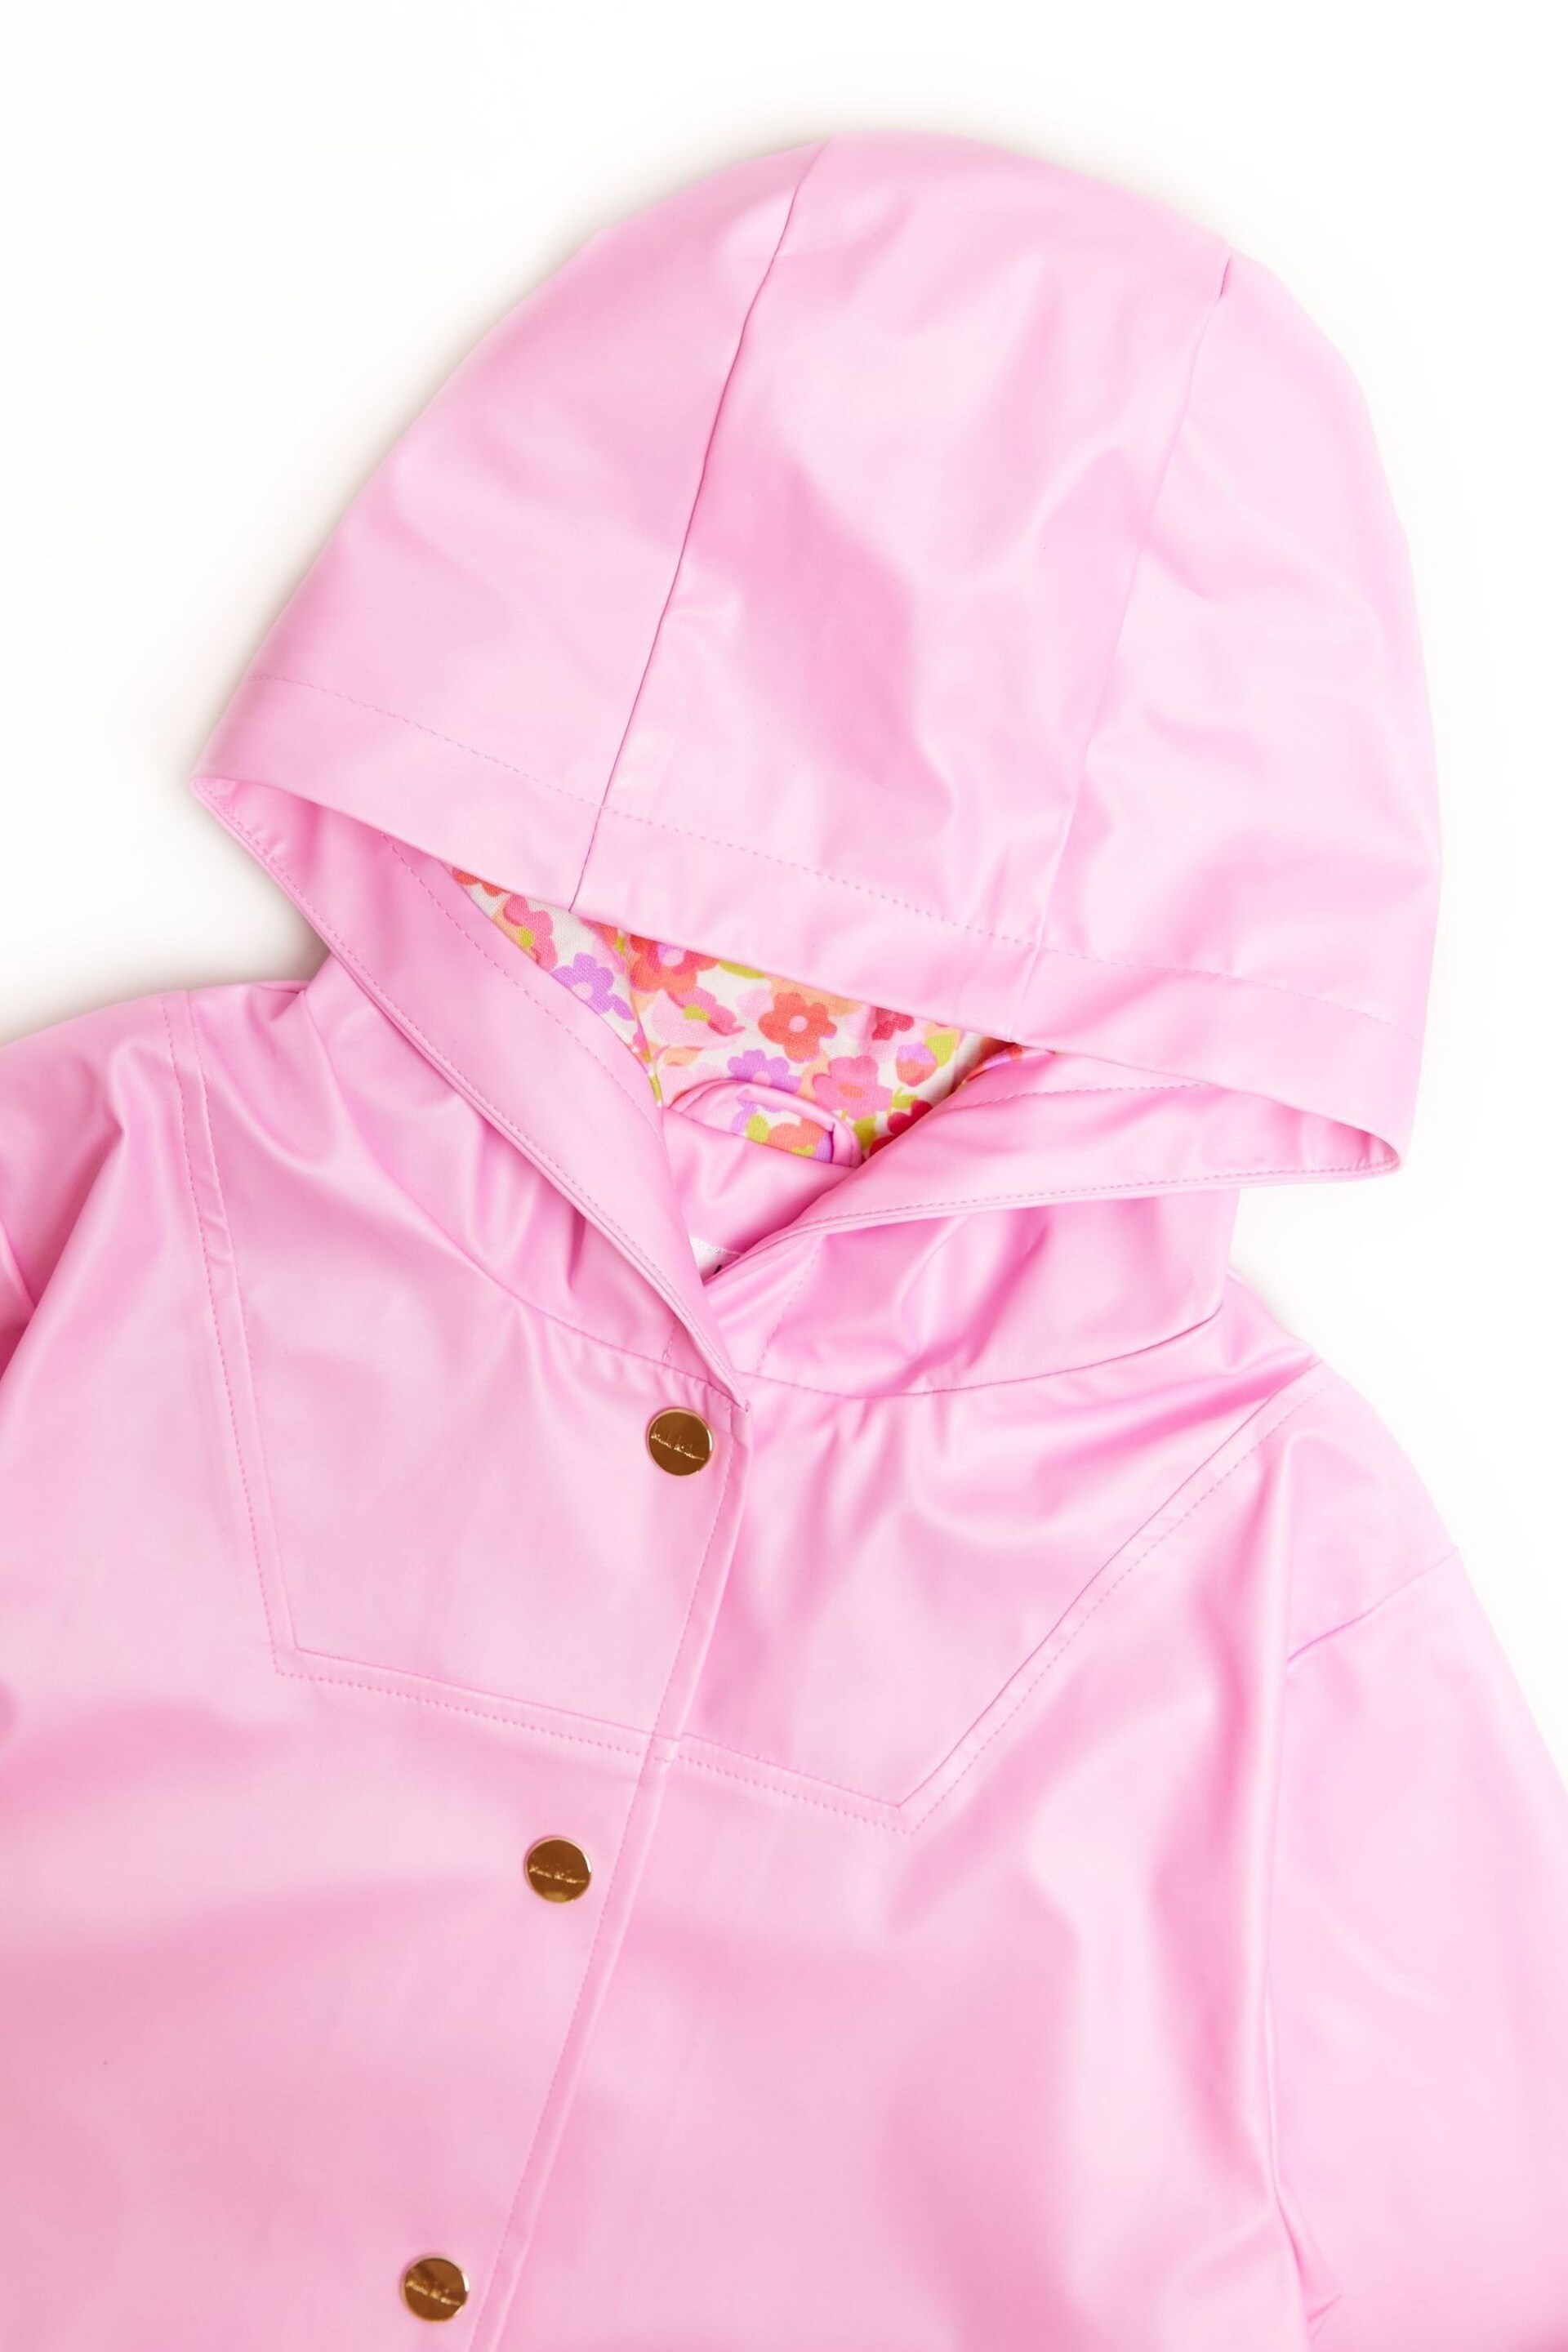 Nicole Miller Pink Pearlescent Raincoat - Image 3 of 4